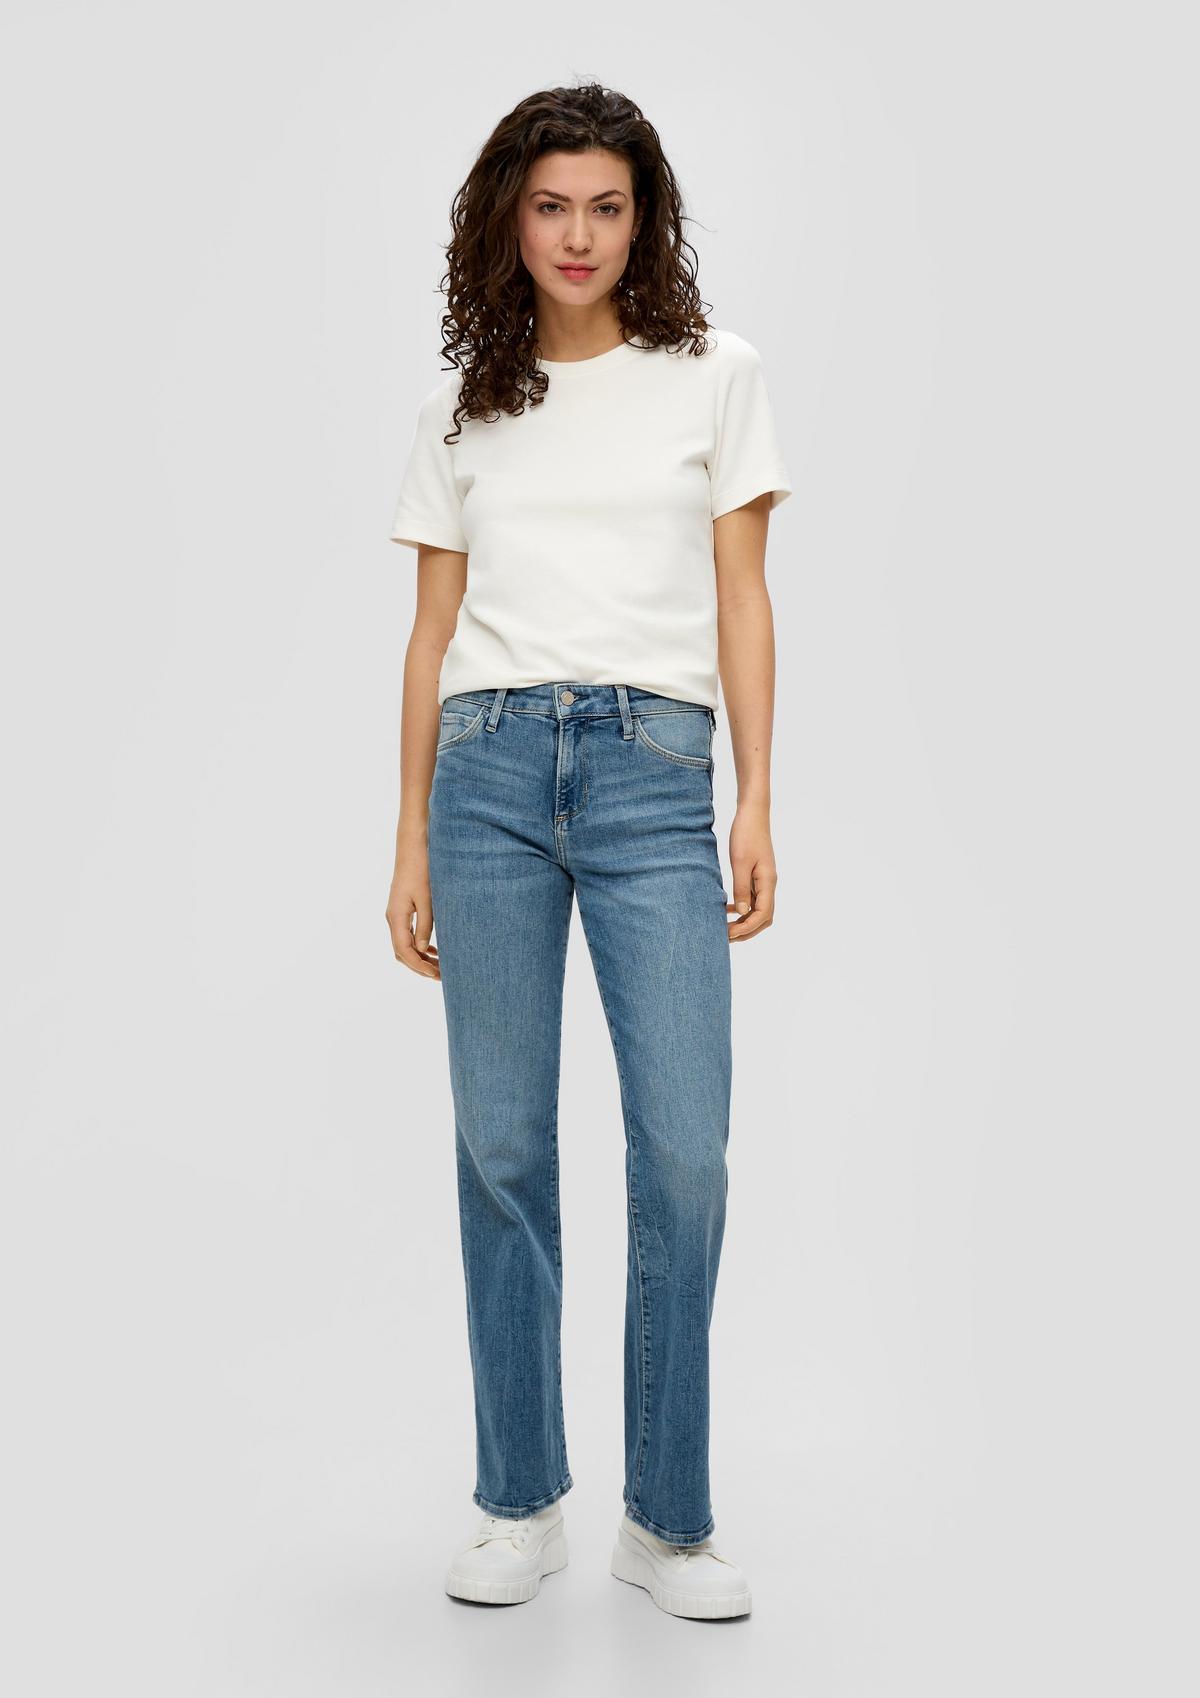 Jeans Selena / Regular Fit / Mid Rise / Flared Leg